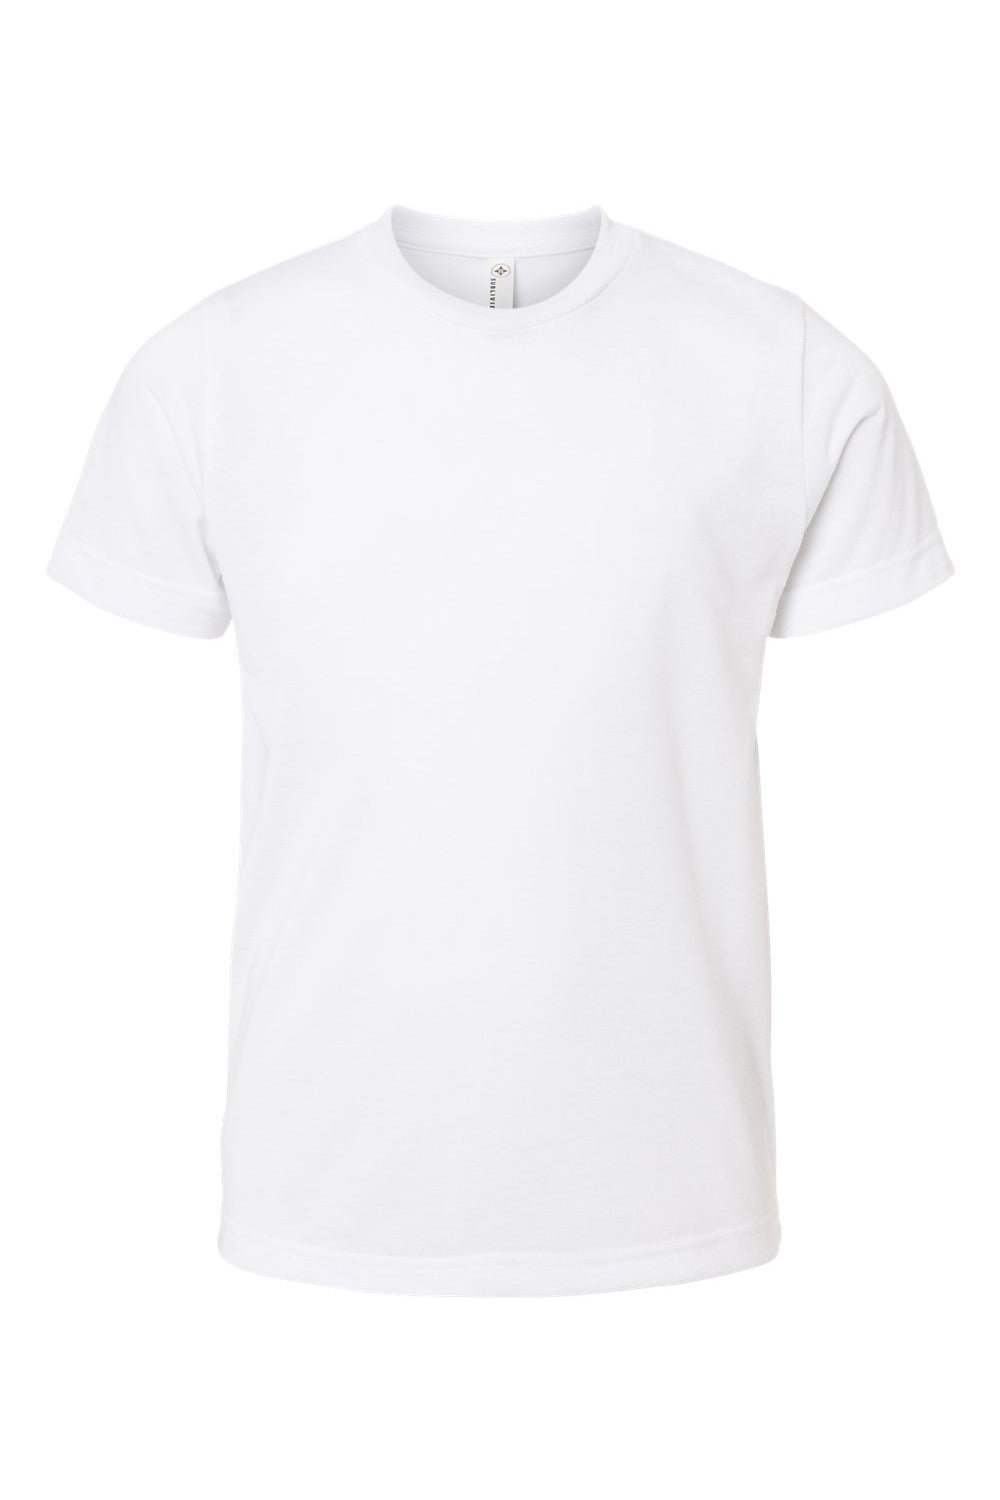 Sublivie 1210 Youth Polyester Sublimation Short Sleeve Crewneck T-Shirt White Flat Front